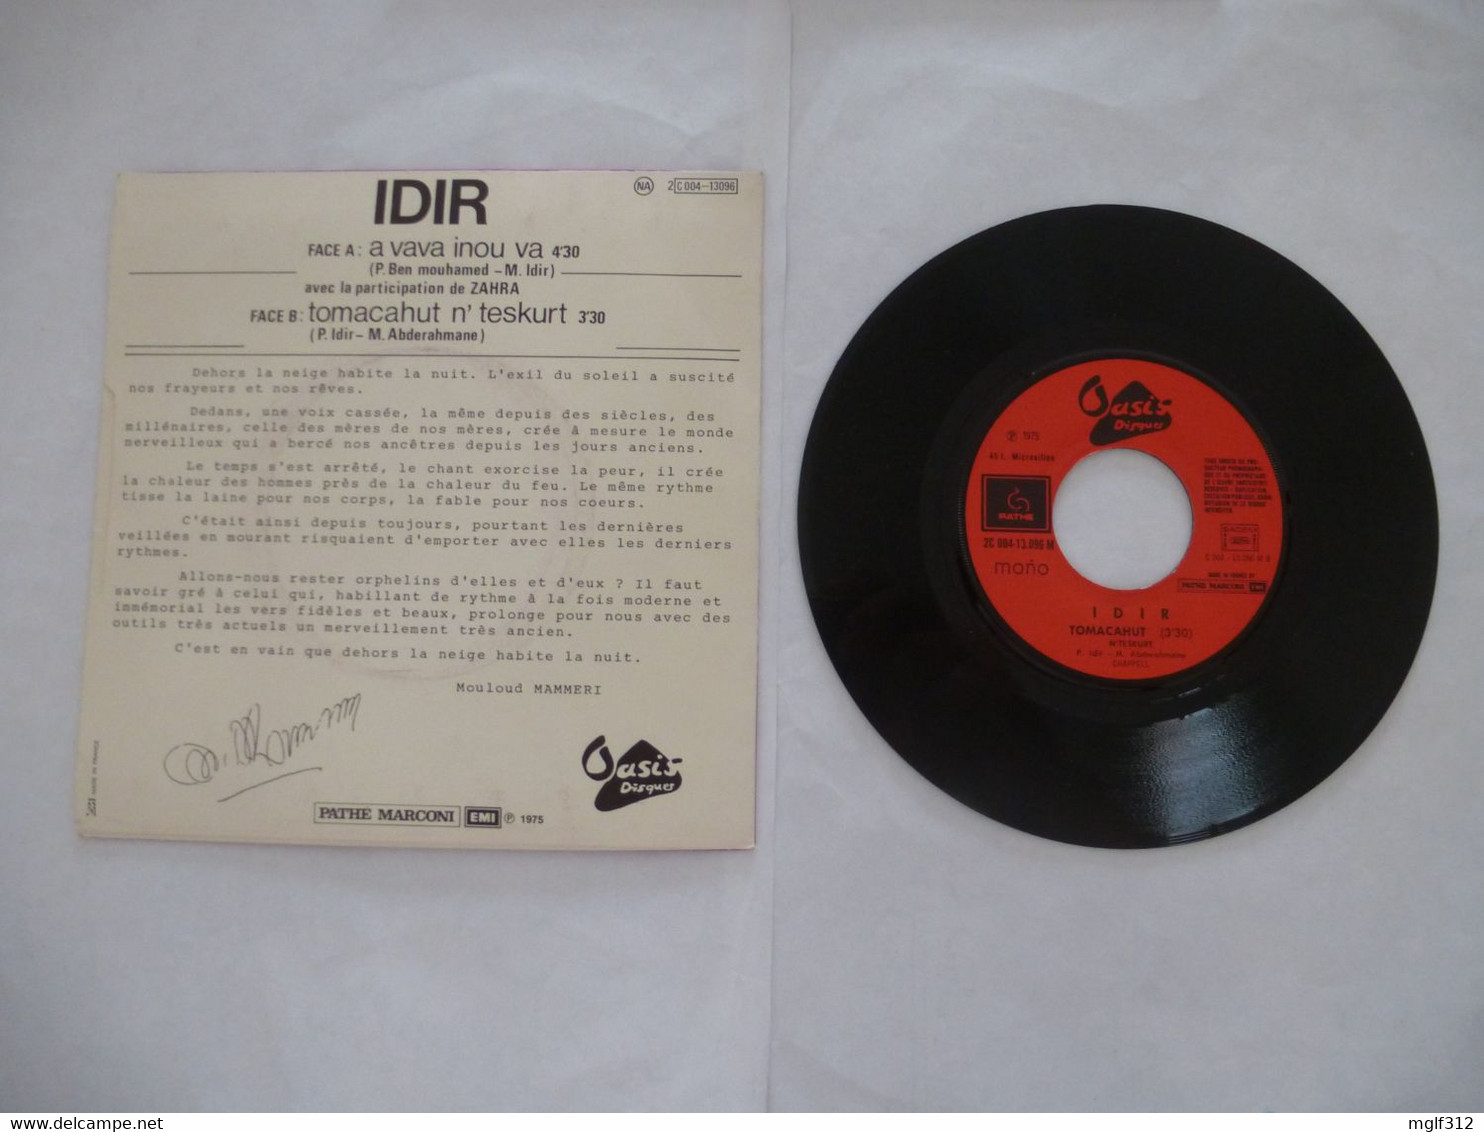 IDIR : EP 2 Titres - Editeur EMI PATHE - 1975 - World Music